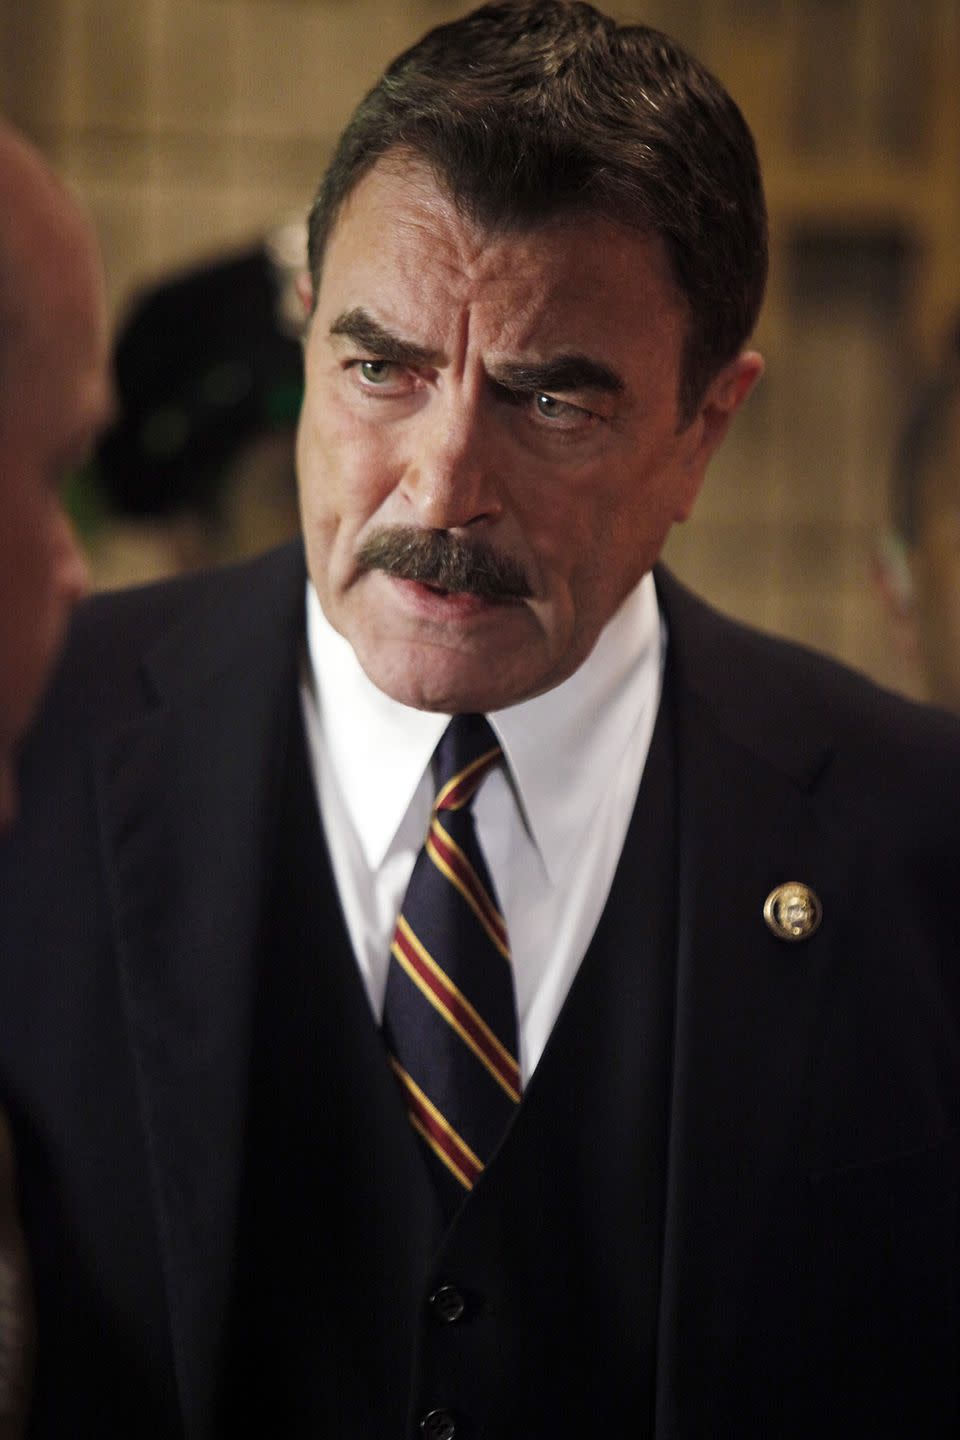 Tom Selleck as Frank Reagan